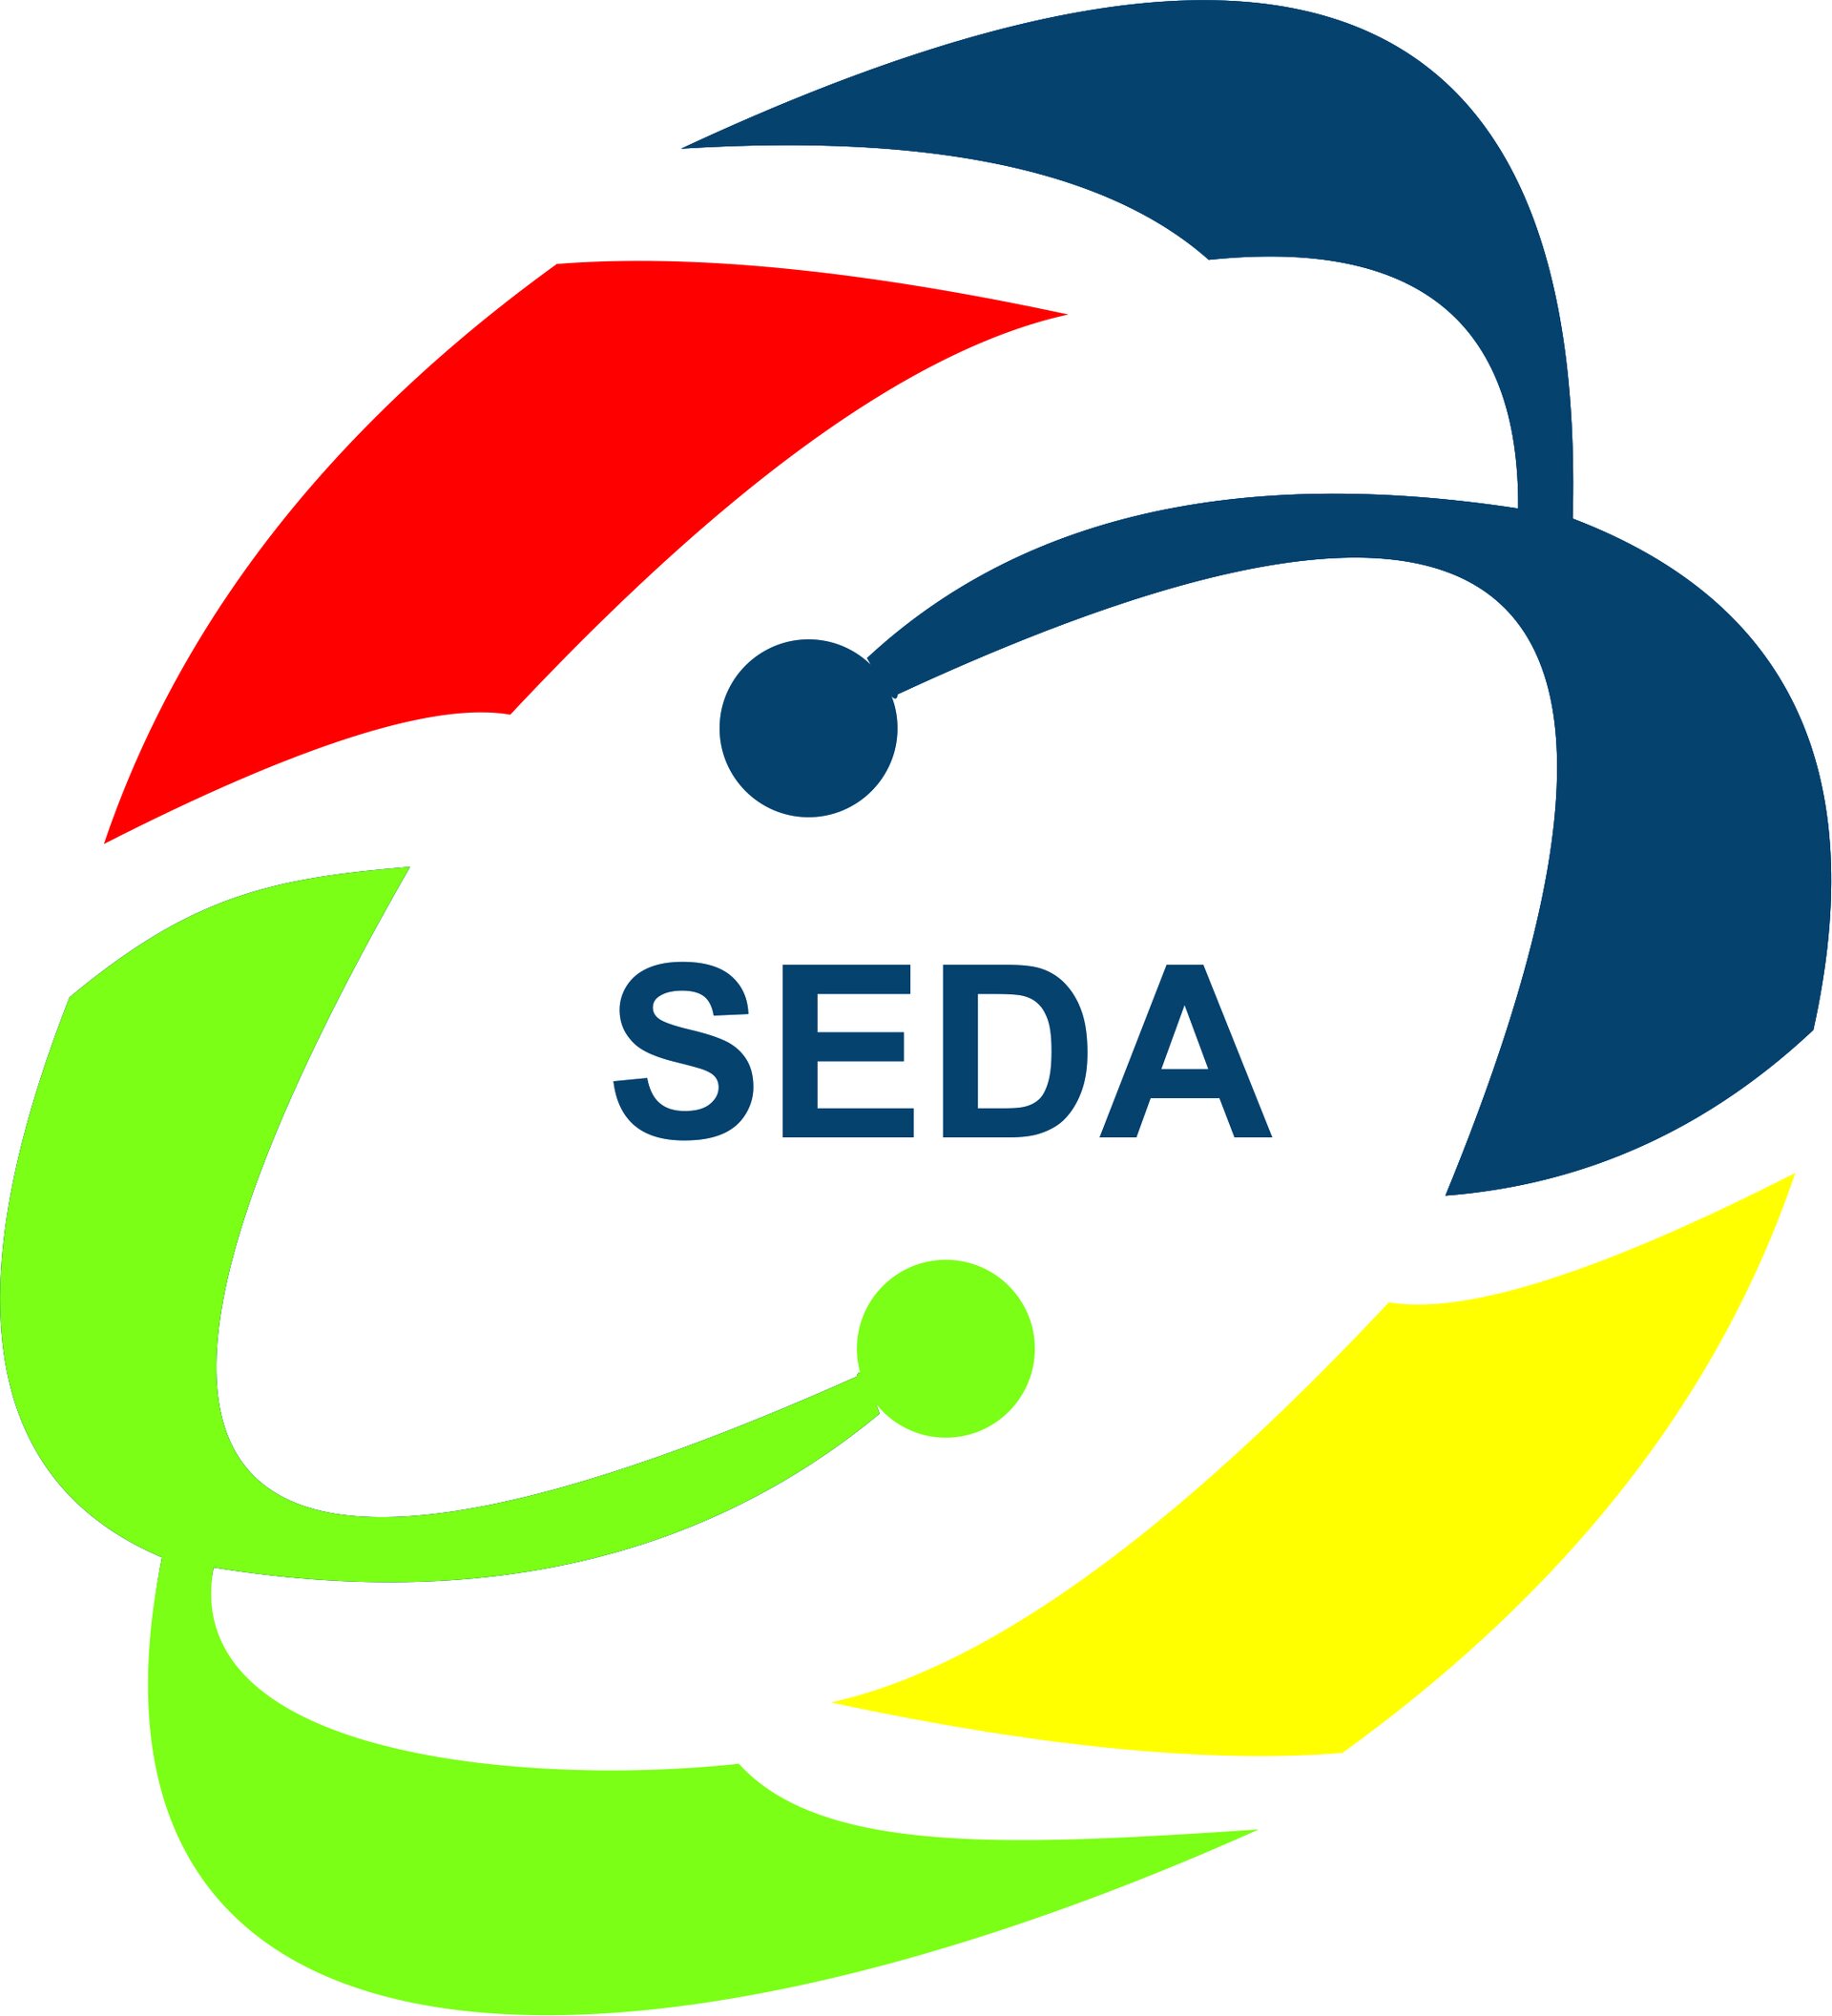 Link to the Seda website